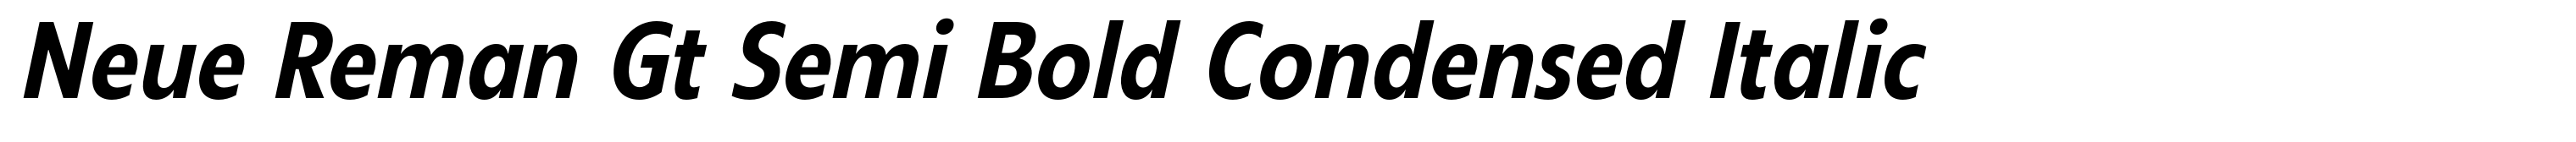 Neue Reman Gt Semi Bold Condensed Italic